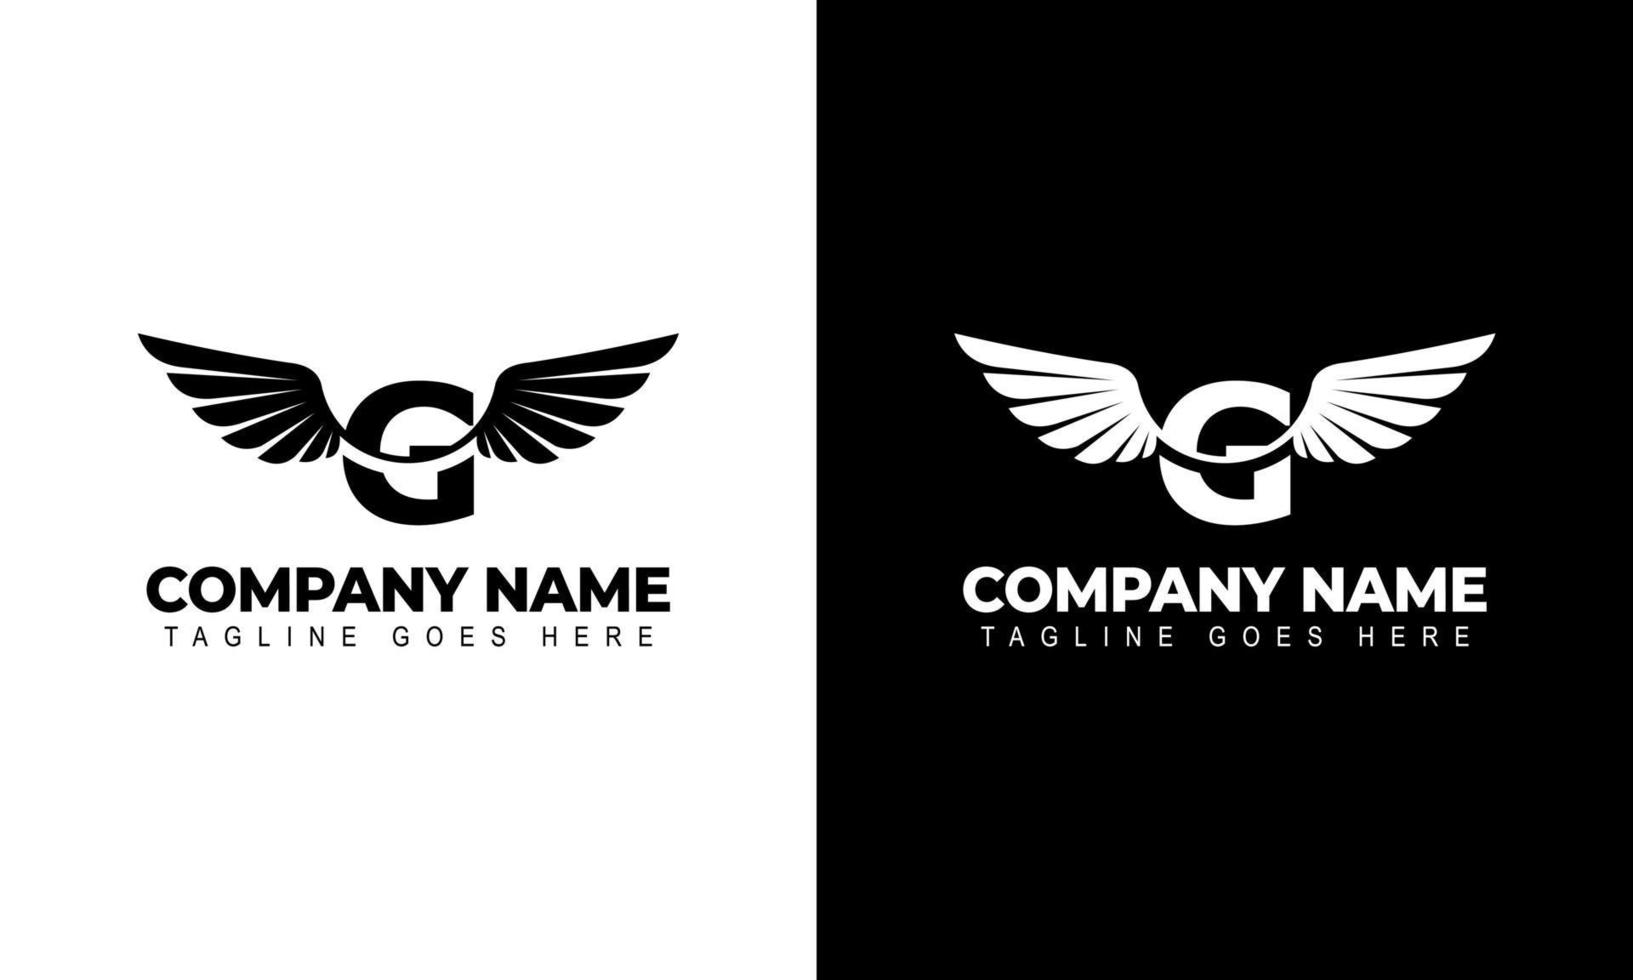 Letter G with wings logo label emblem sign stamp. Vector illustrations